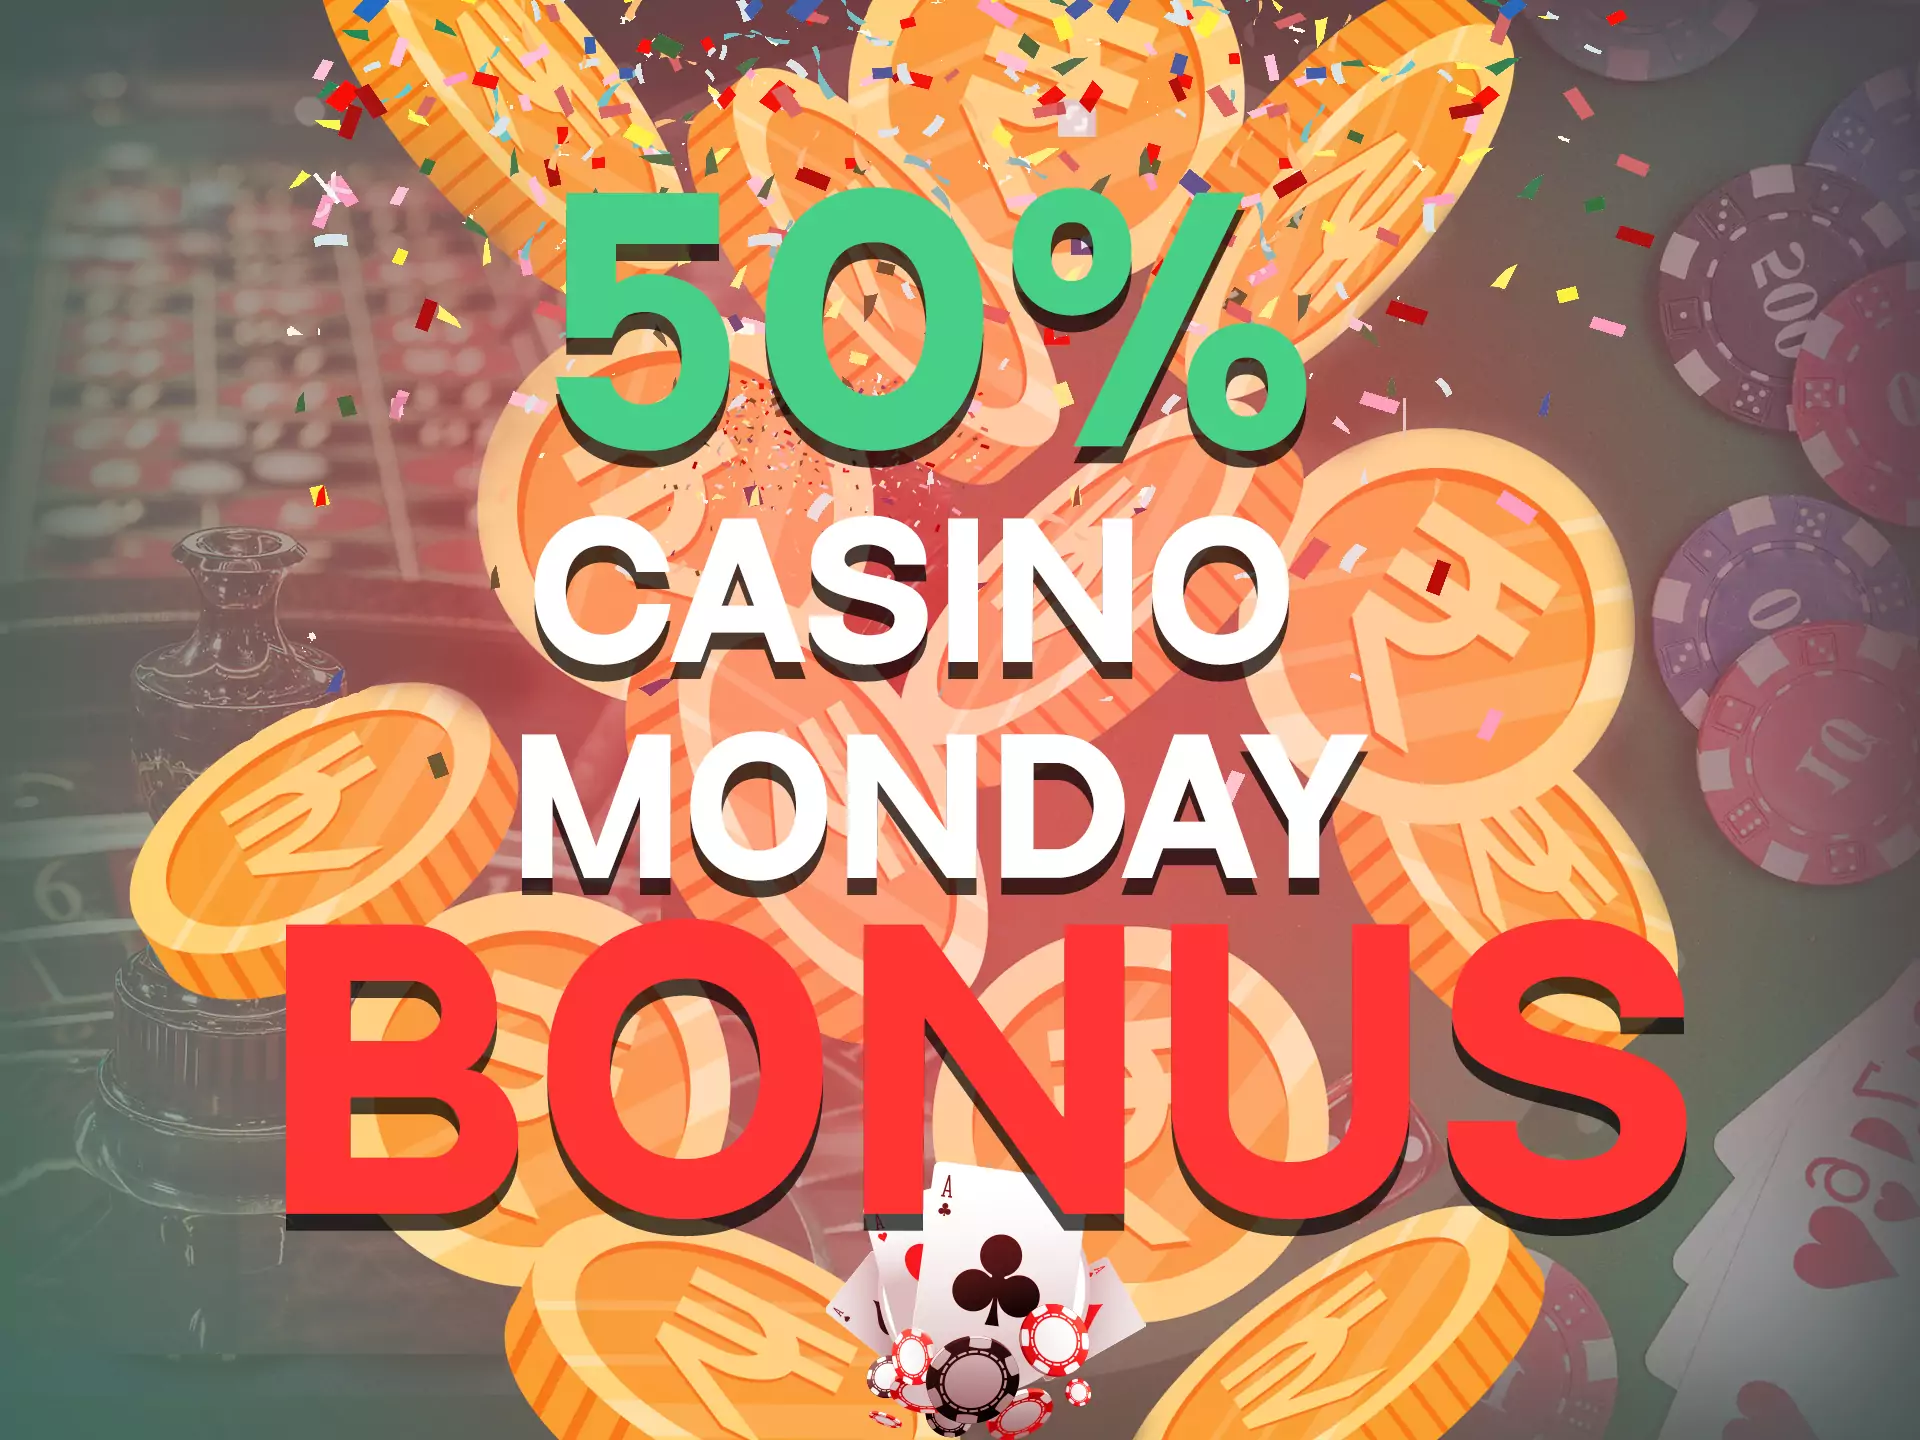 On Mondays, you can claim an additional bonus on casino games.